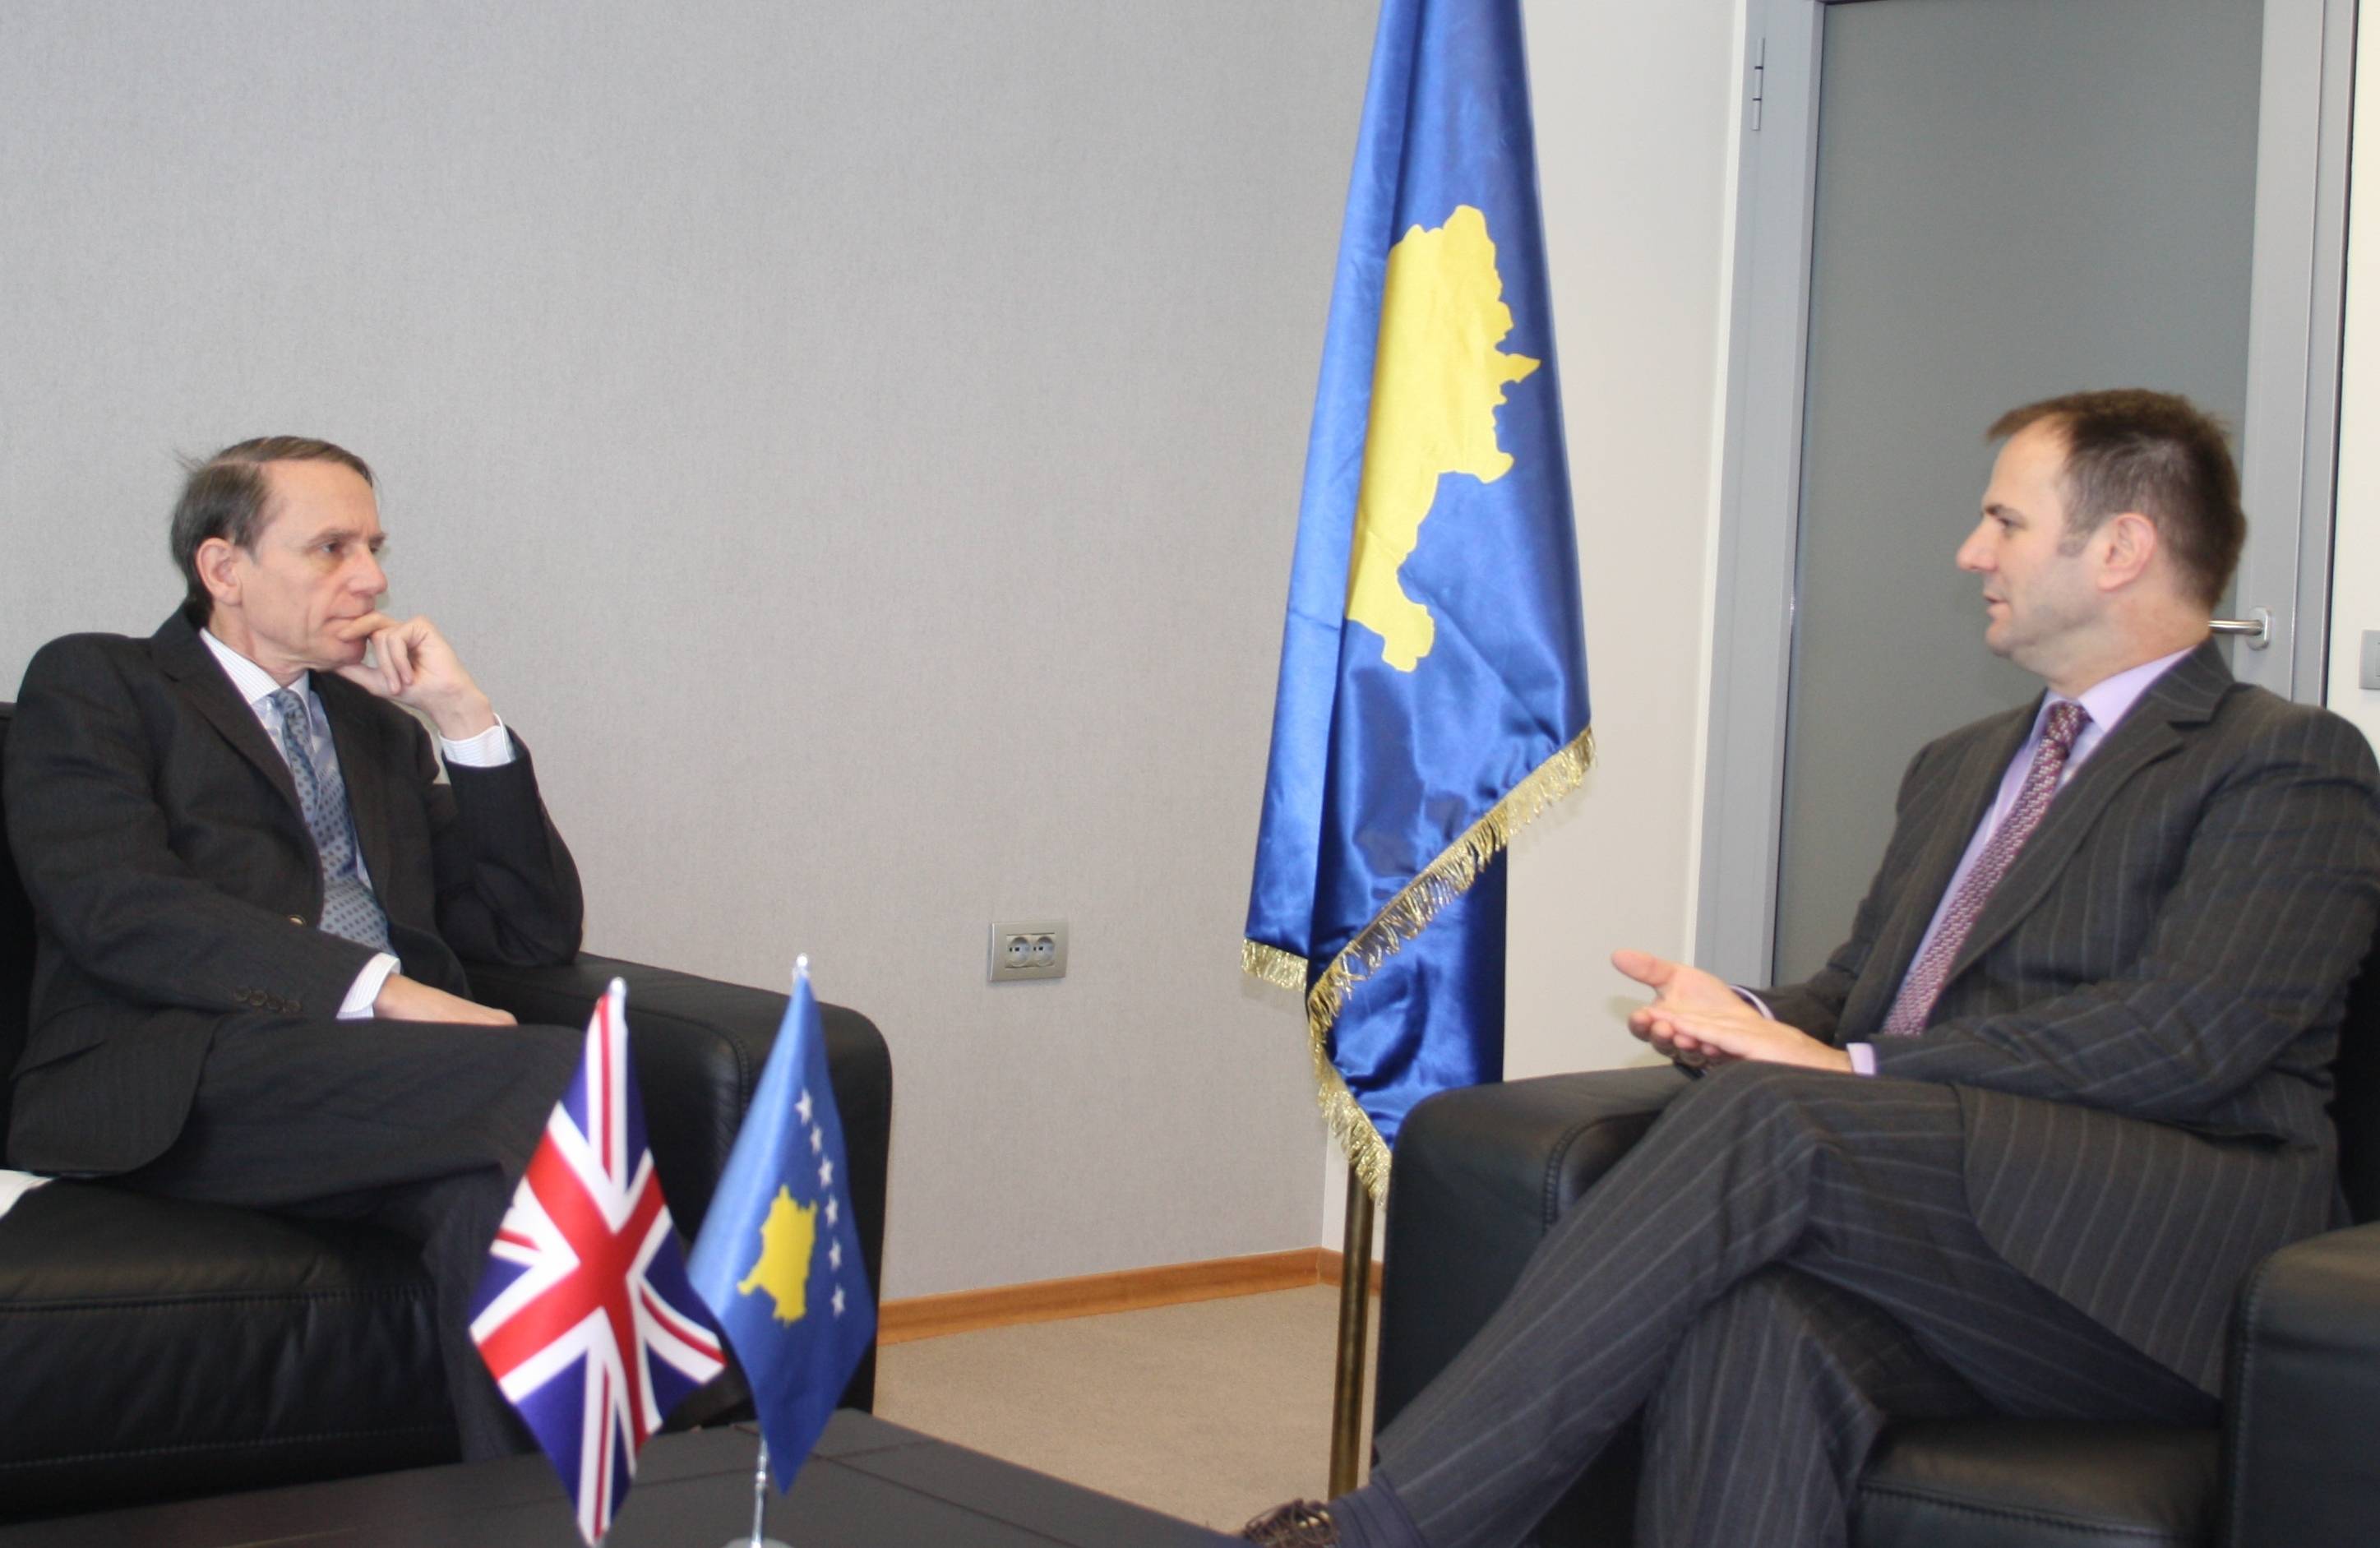 Zëvendëskryeministri Kuçi u takua me ambasadorin britanik, Cliff